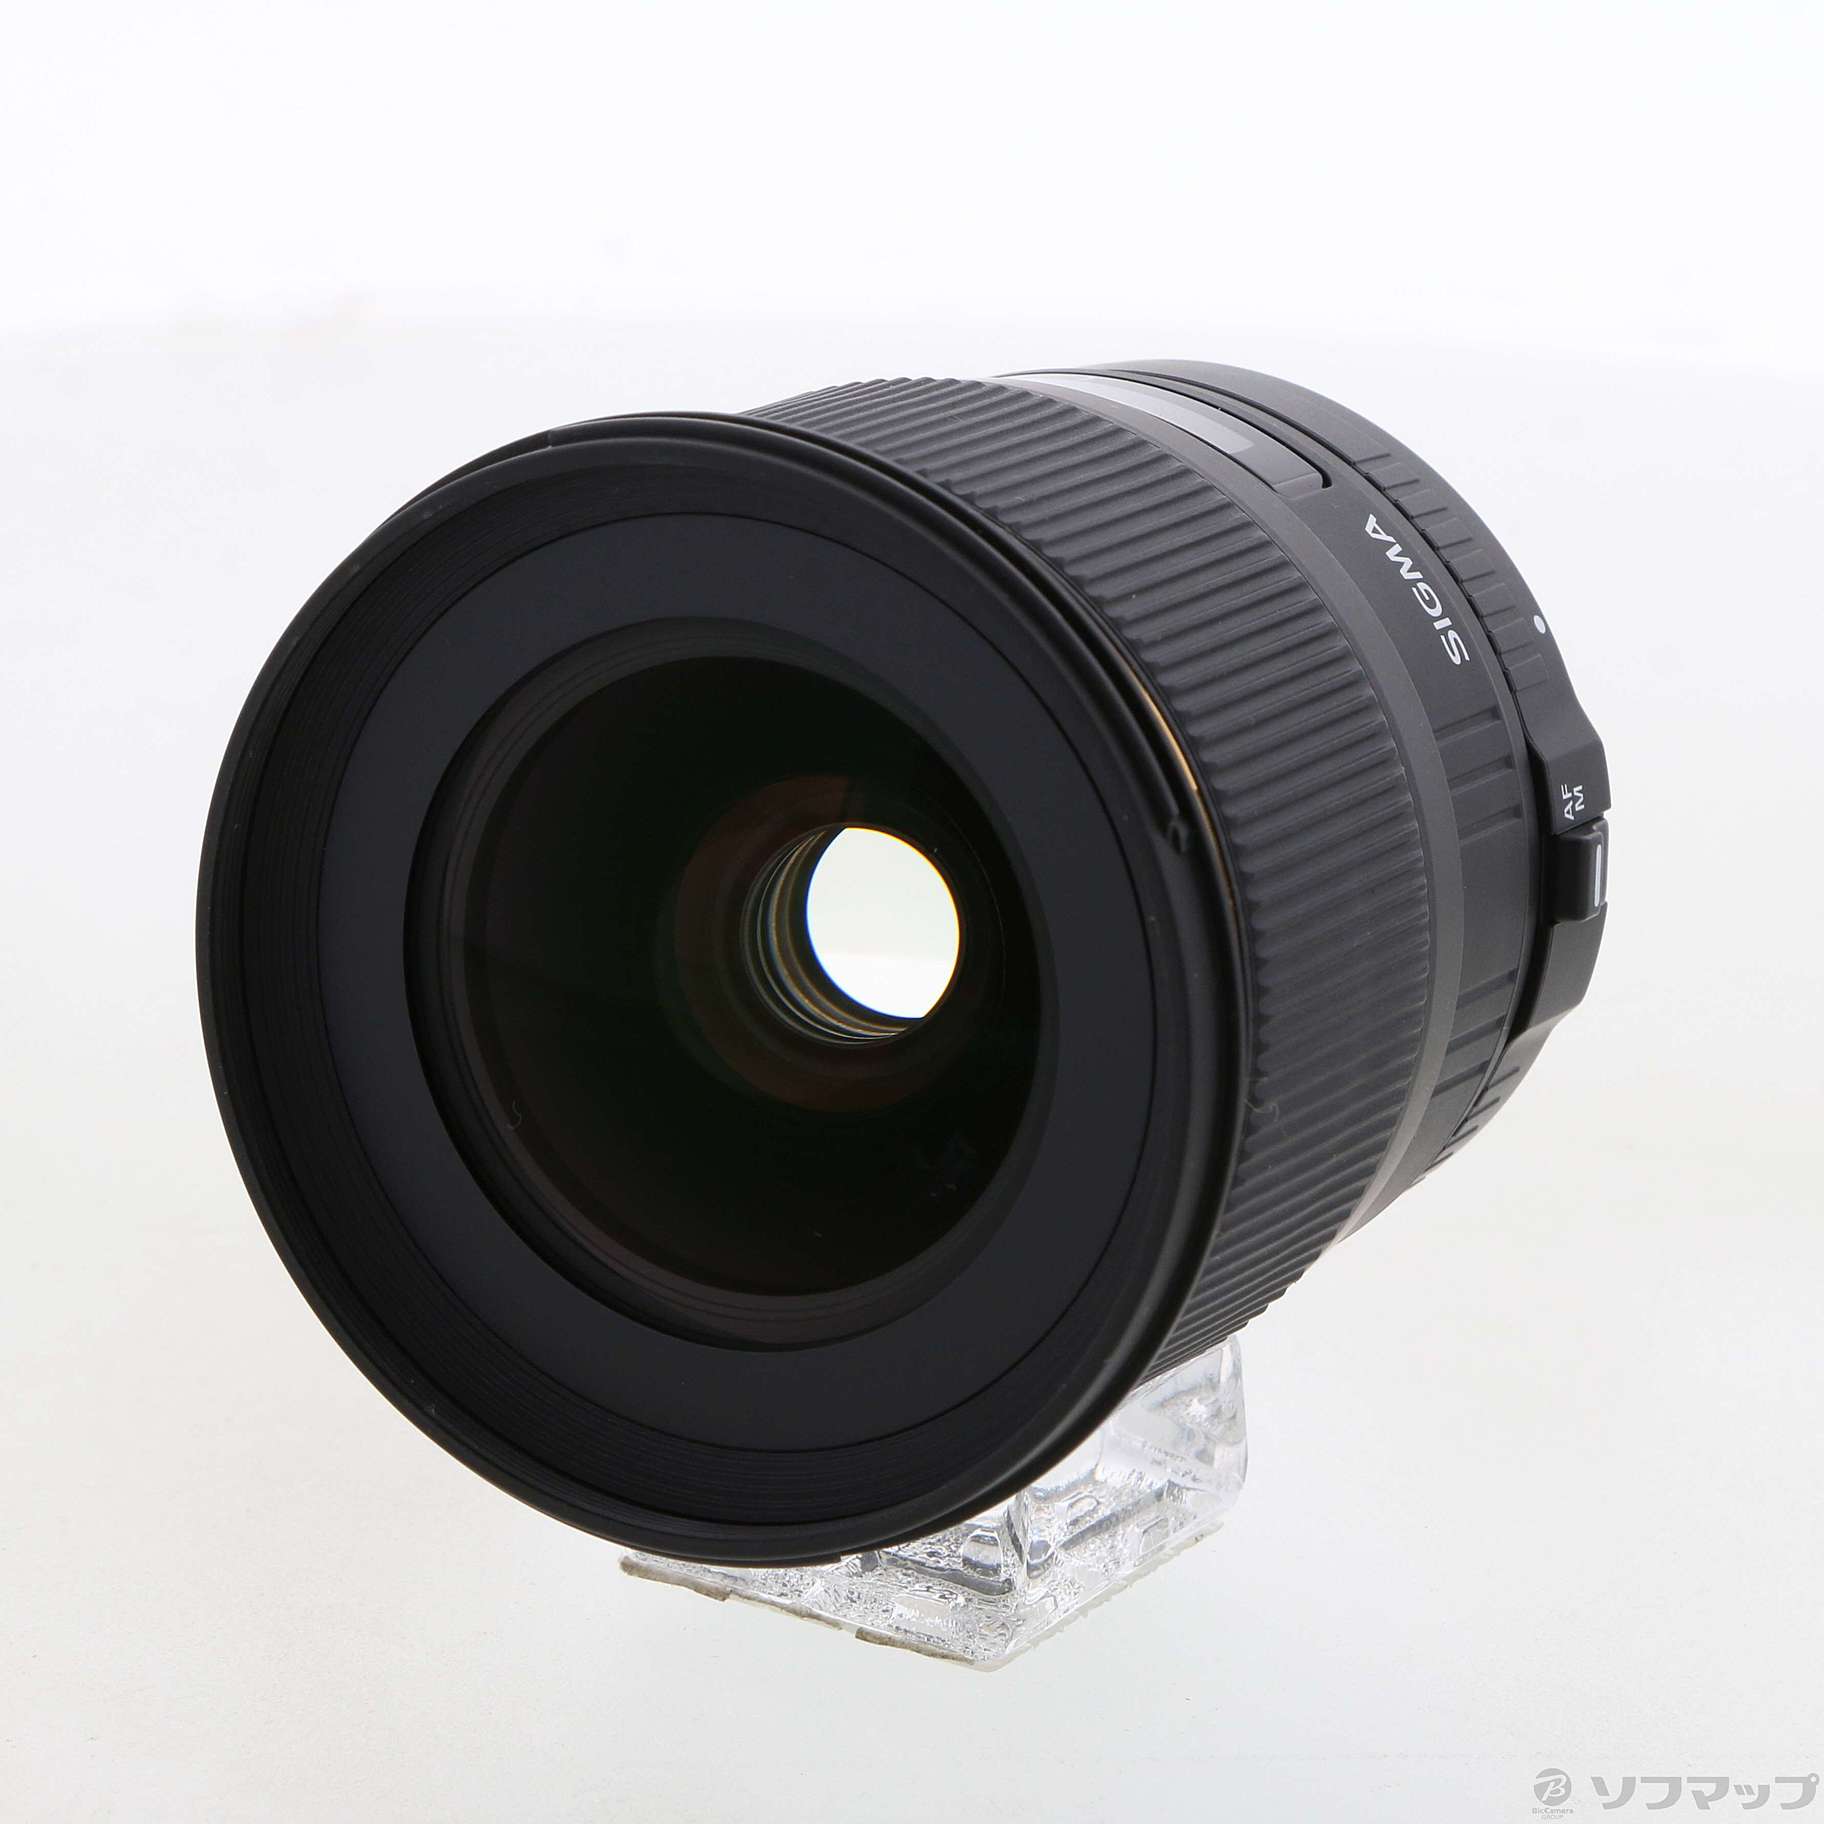 中古】SIGMA 28mm F1.8 EX DG ASPHERICAL MACRO (Canon用